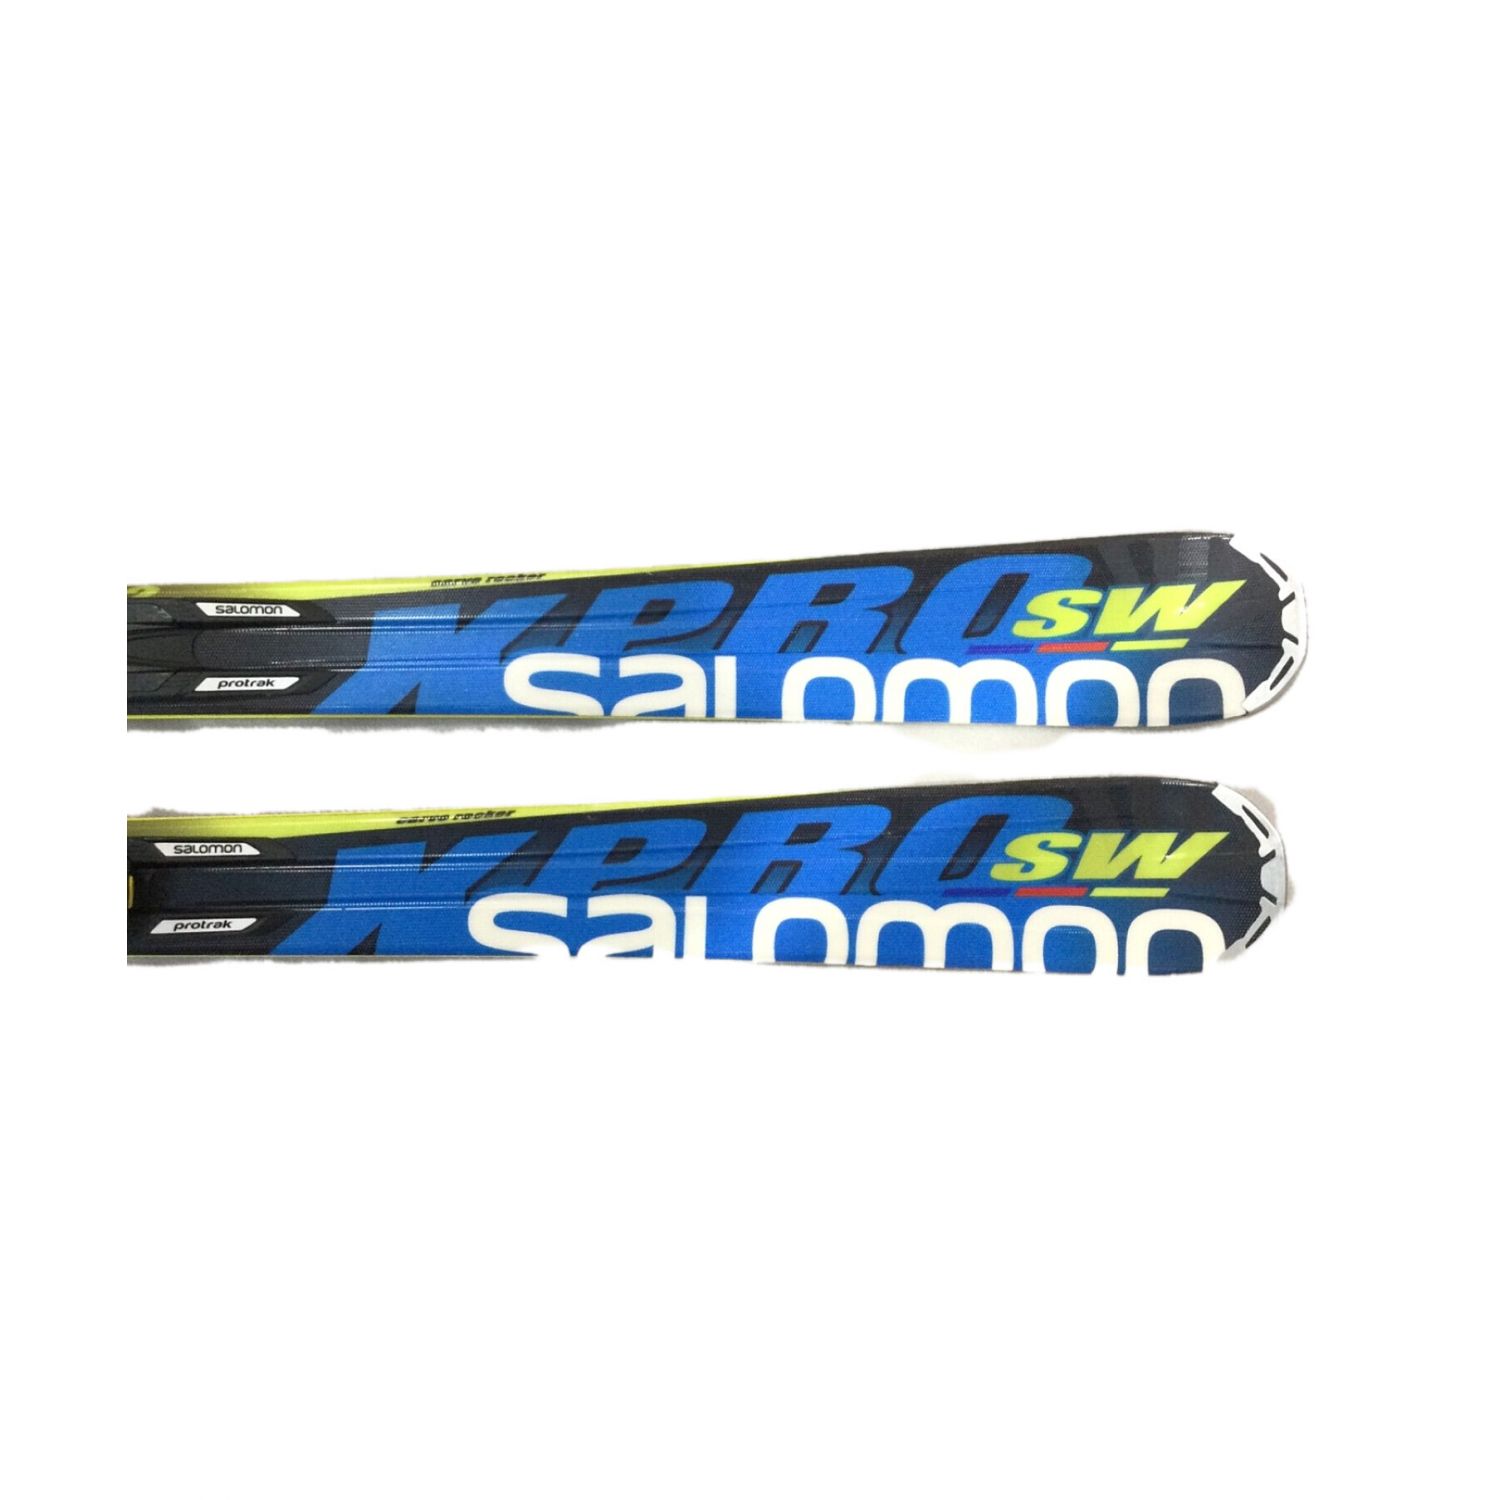 SALOMON サロモン XプロSW 162cm - スキー